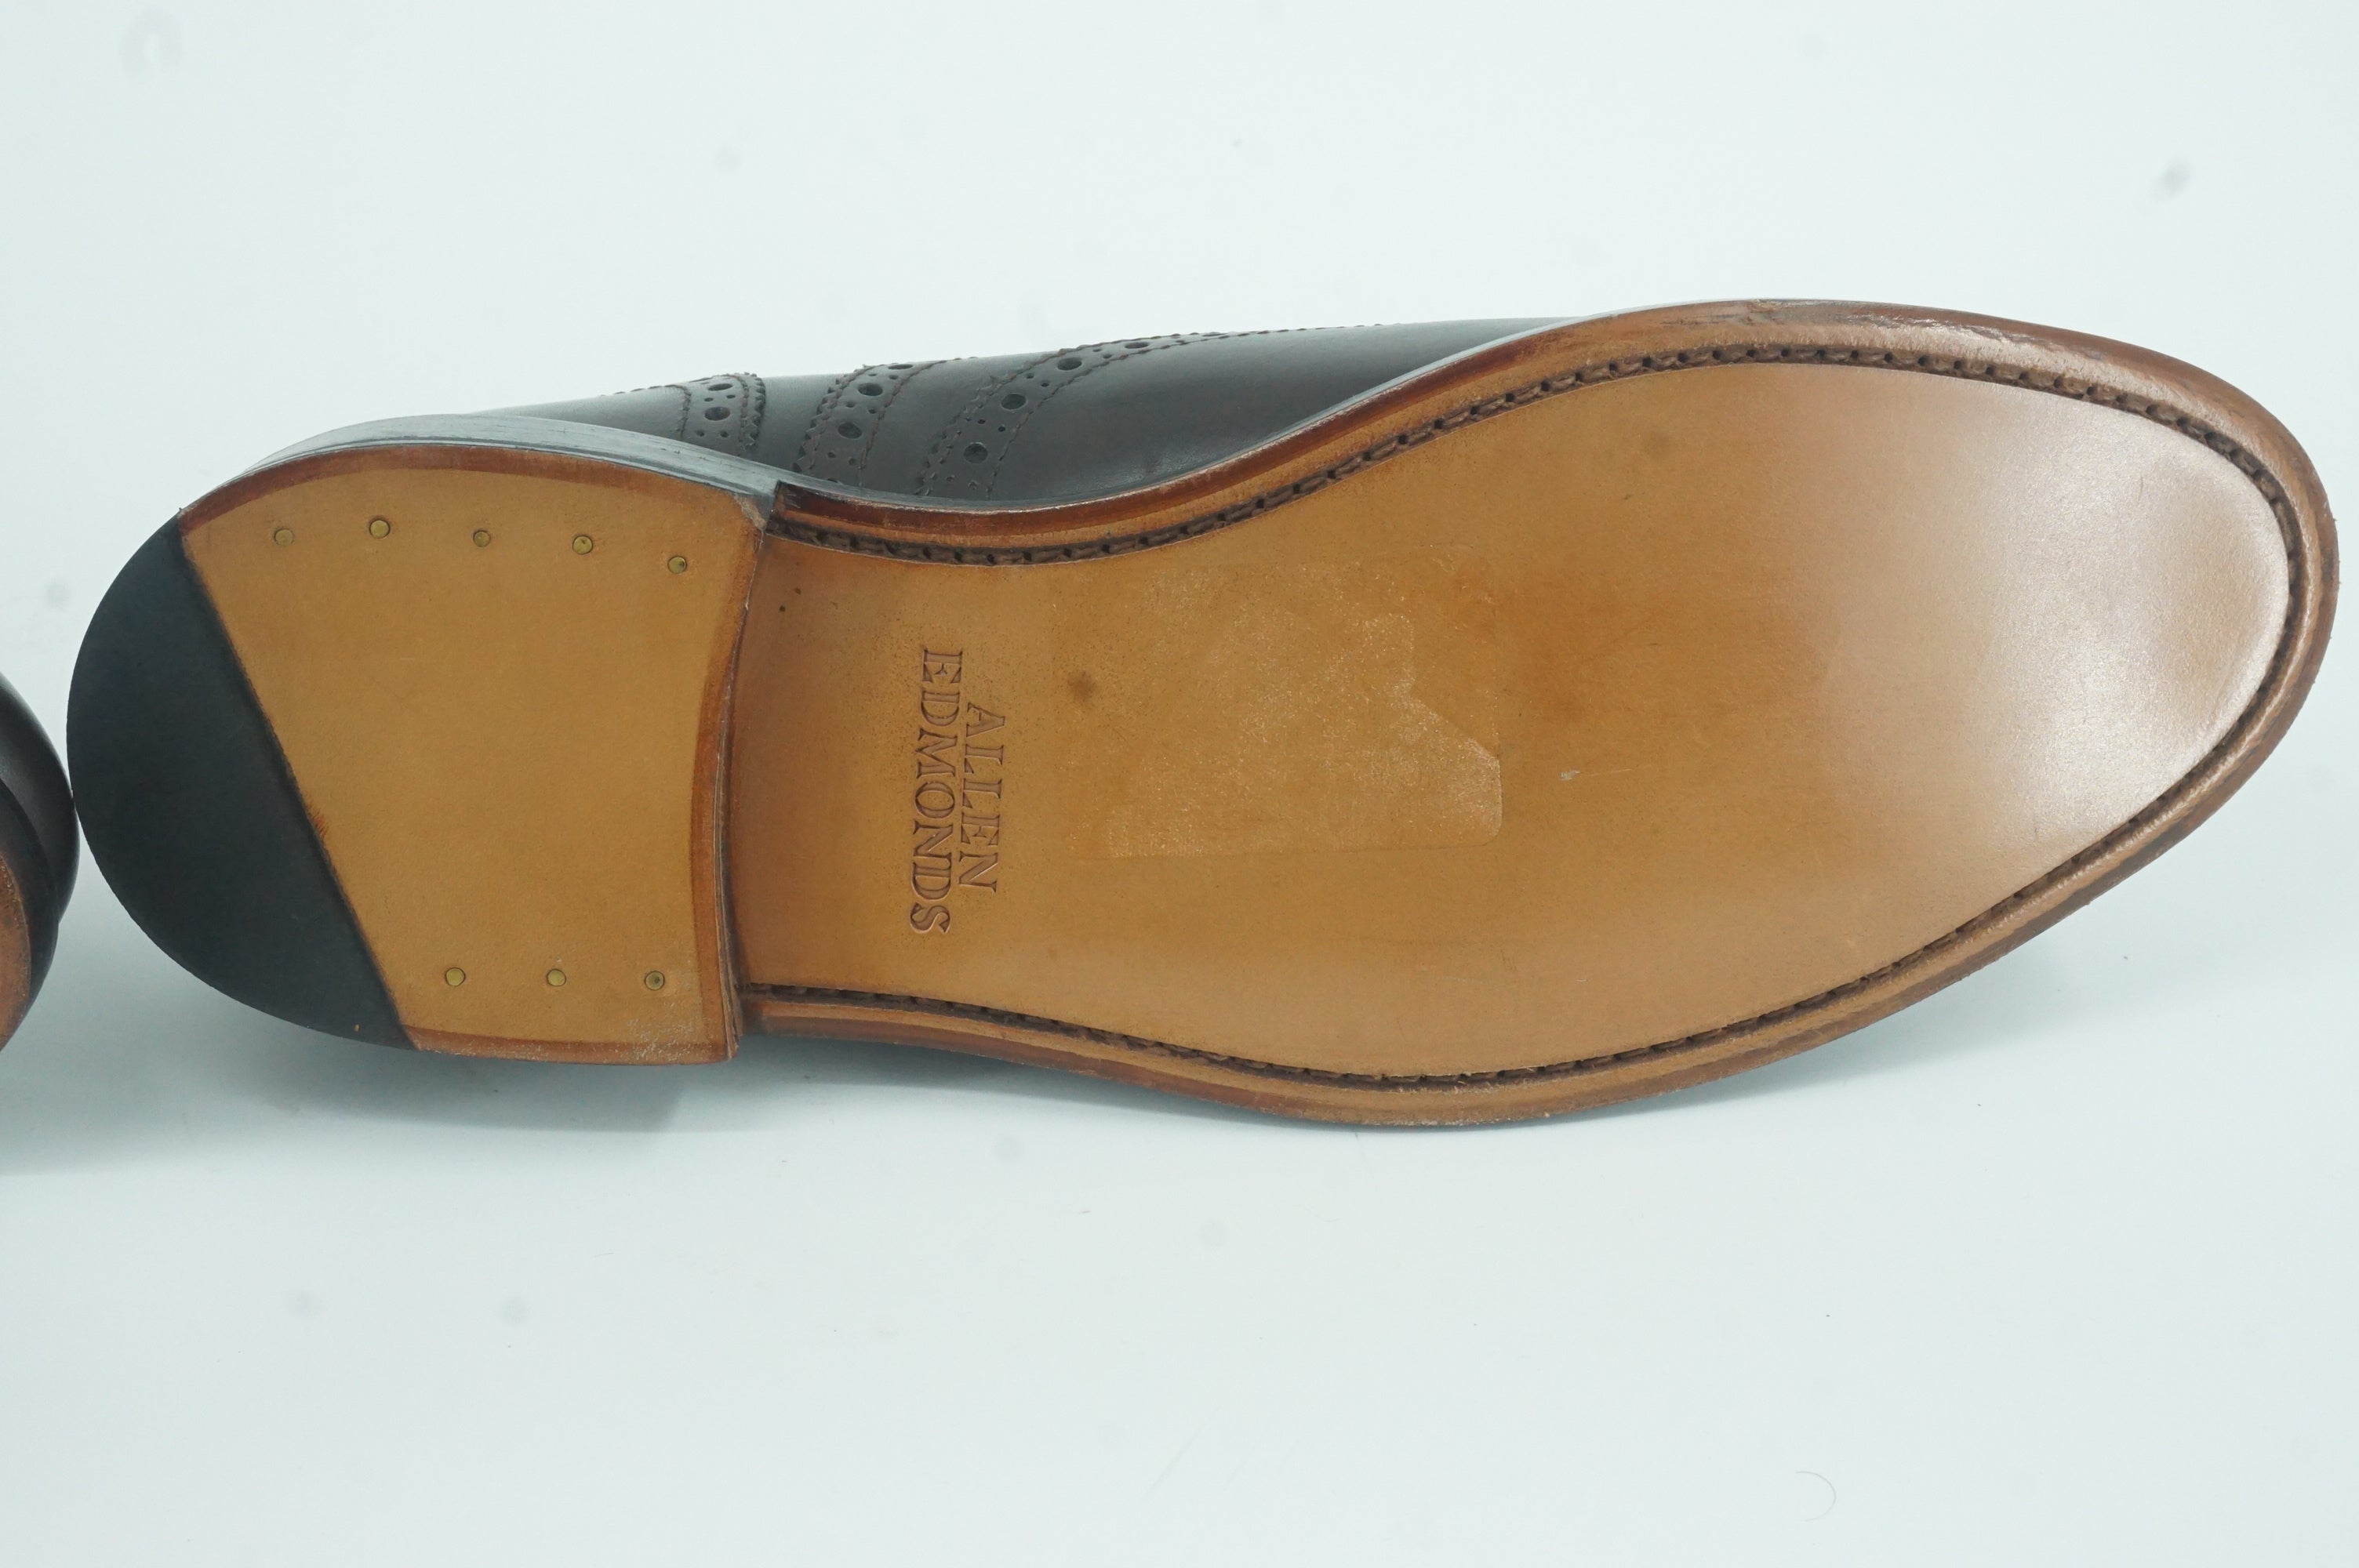 Allen Edmonds Hendrix Brogue Wingtip Oxford Men Shoes Size 9 Leather New $395